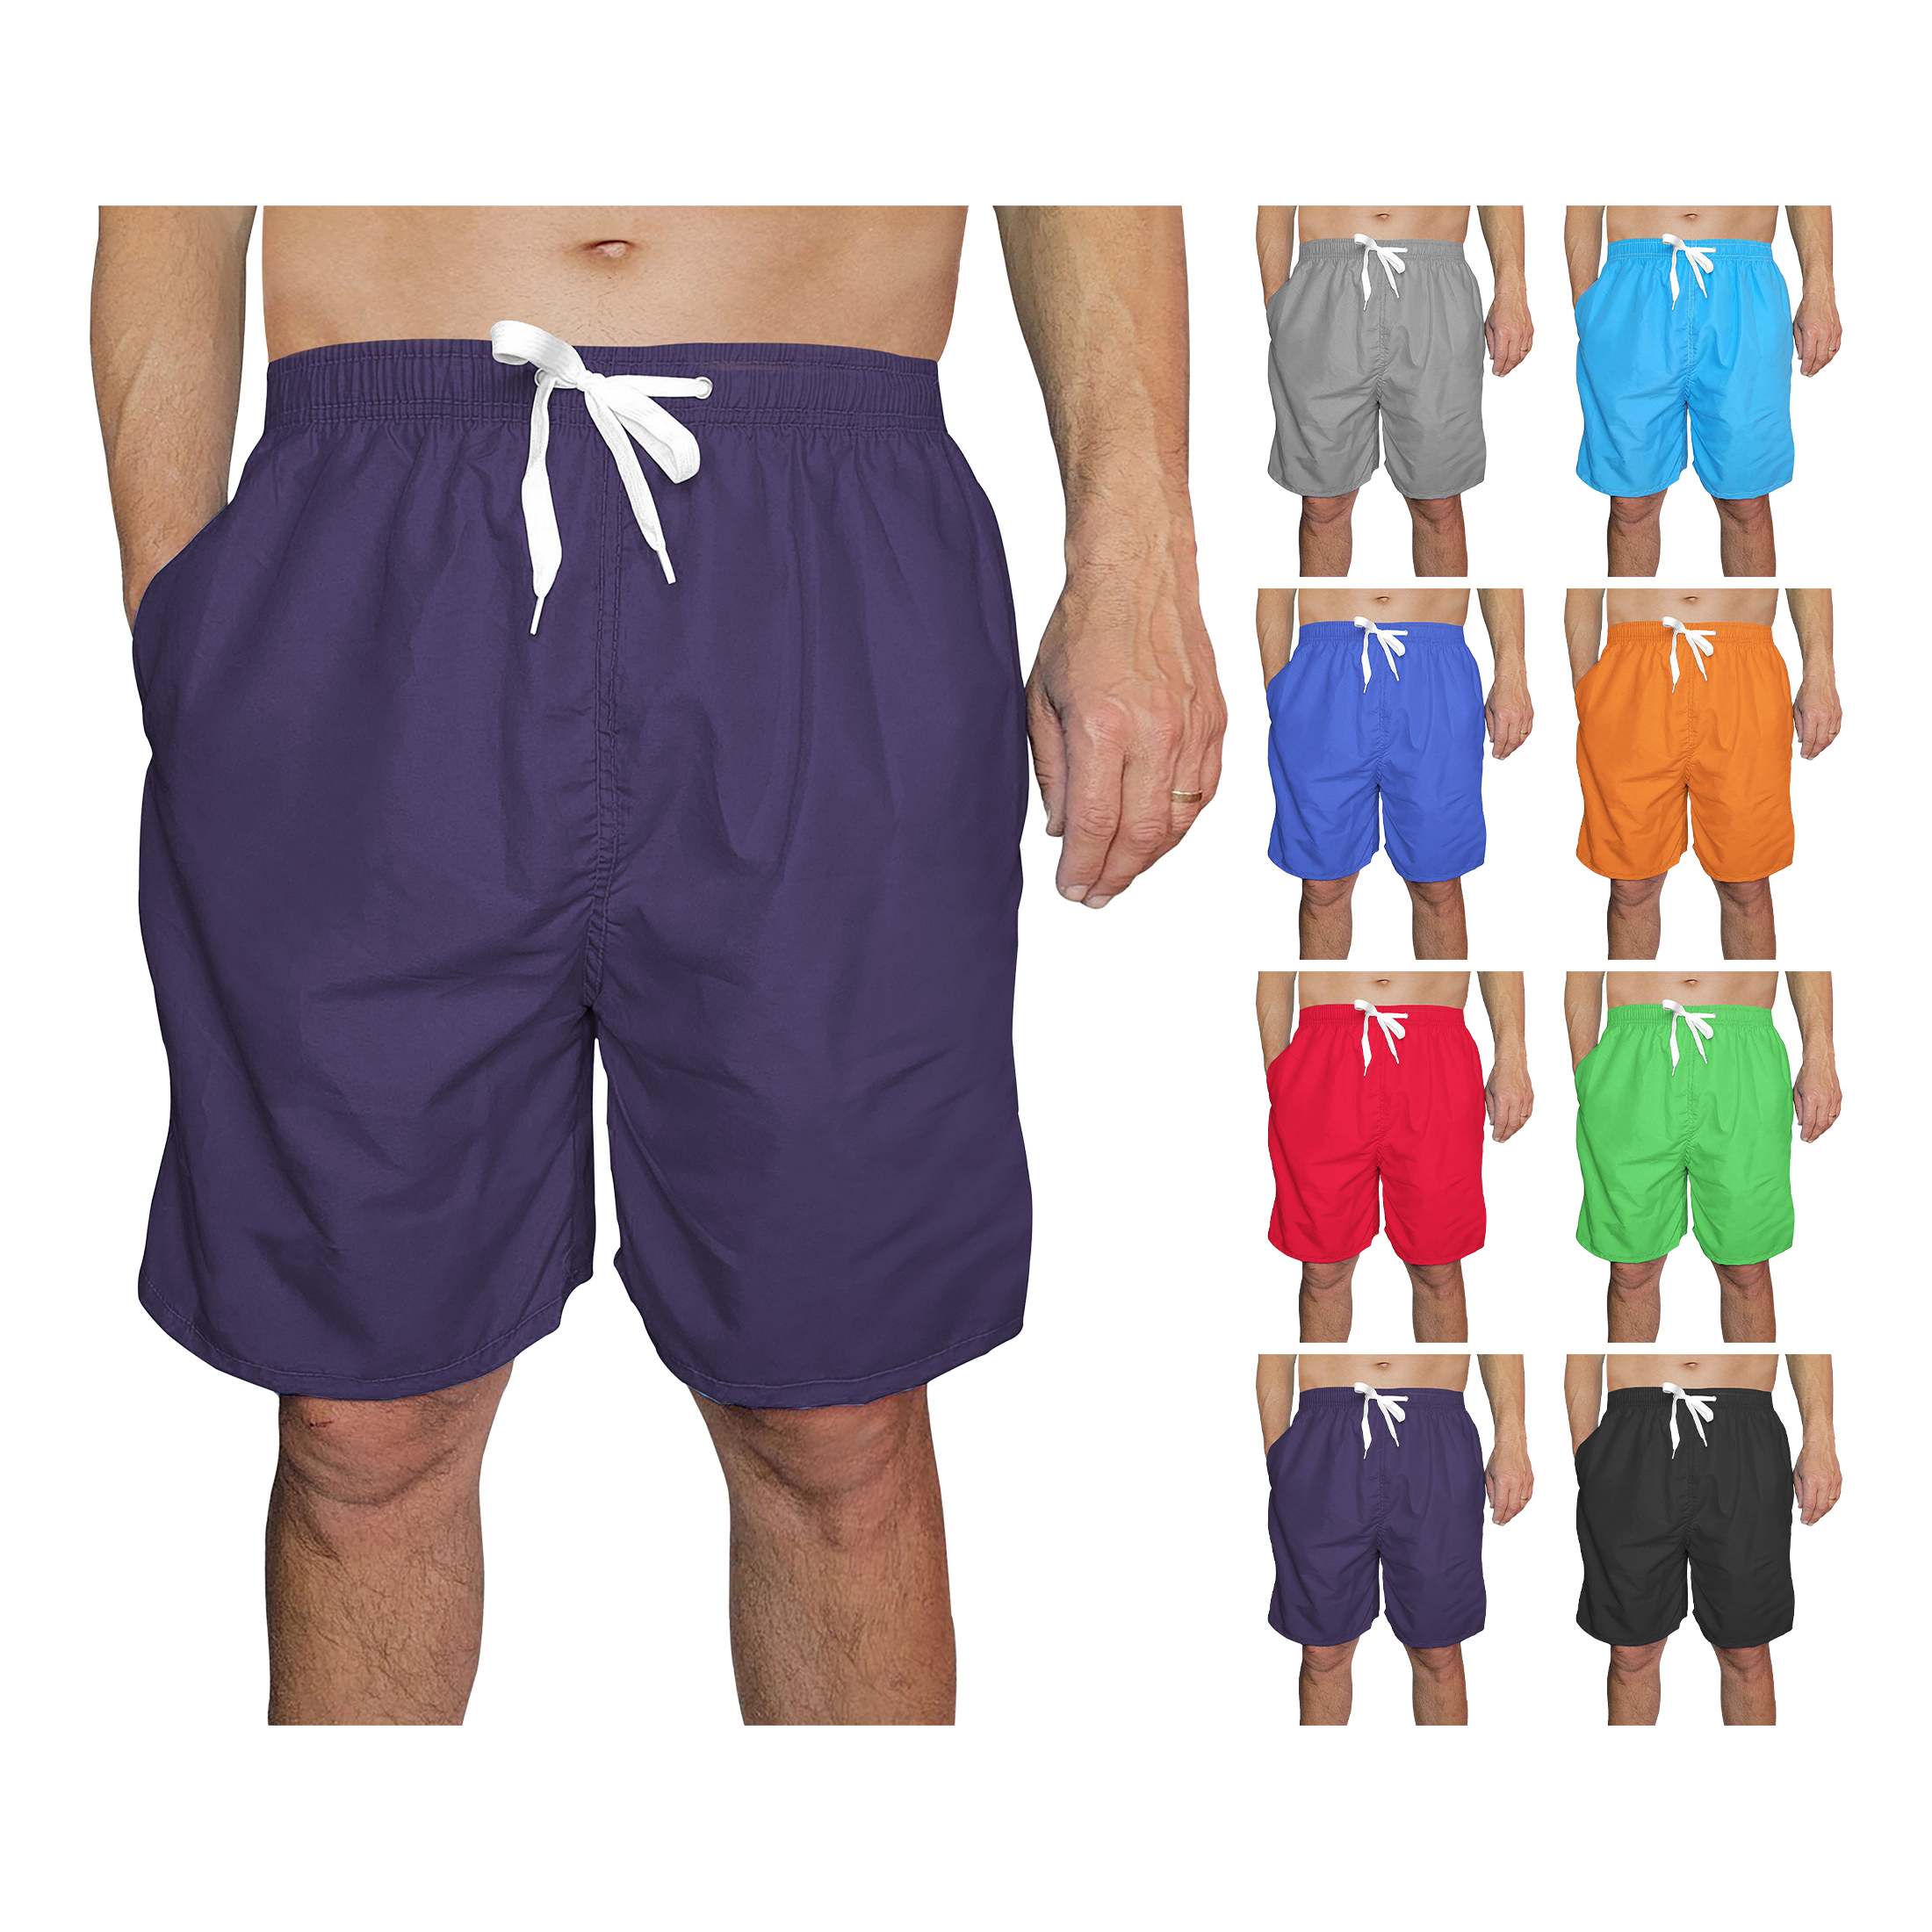 5-Pack Men's Quick Dry Swim Trunks With Pockets Solid Bathing Beachwear Flex Board Shorts - L